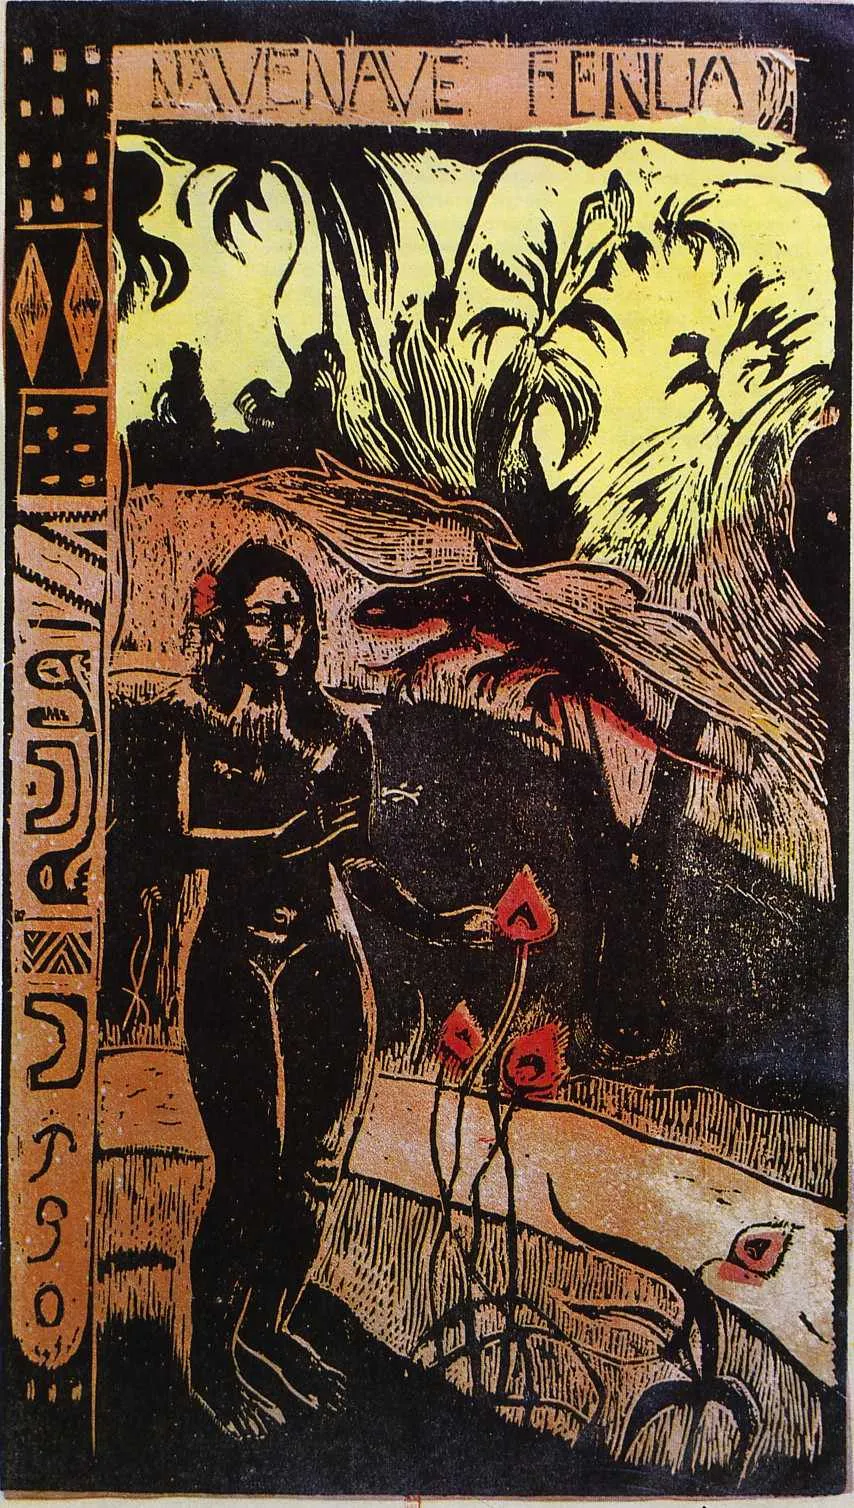 Paul Gauguin: Nave Nave Fenua